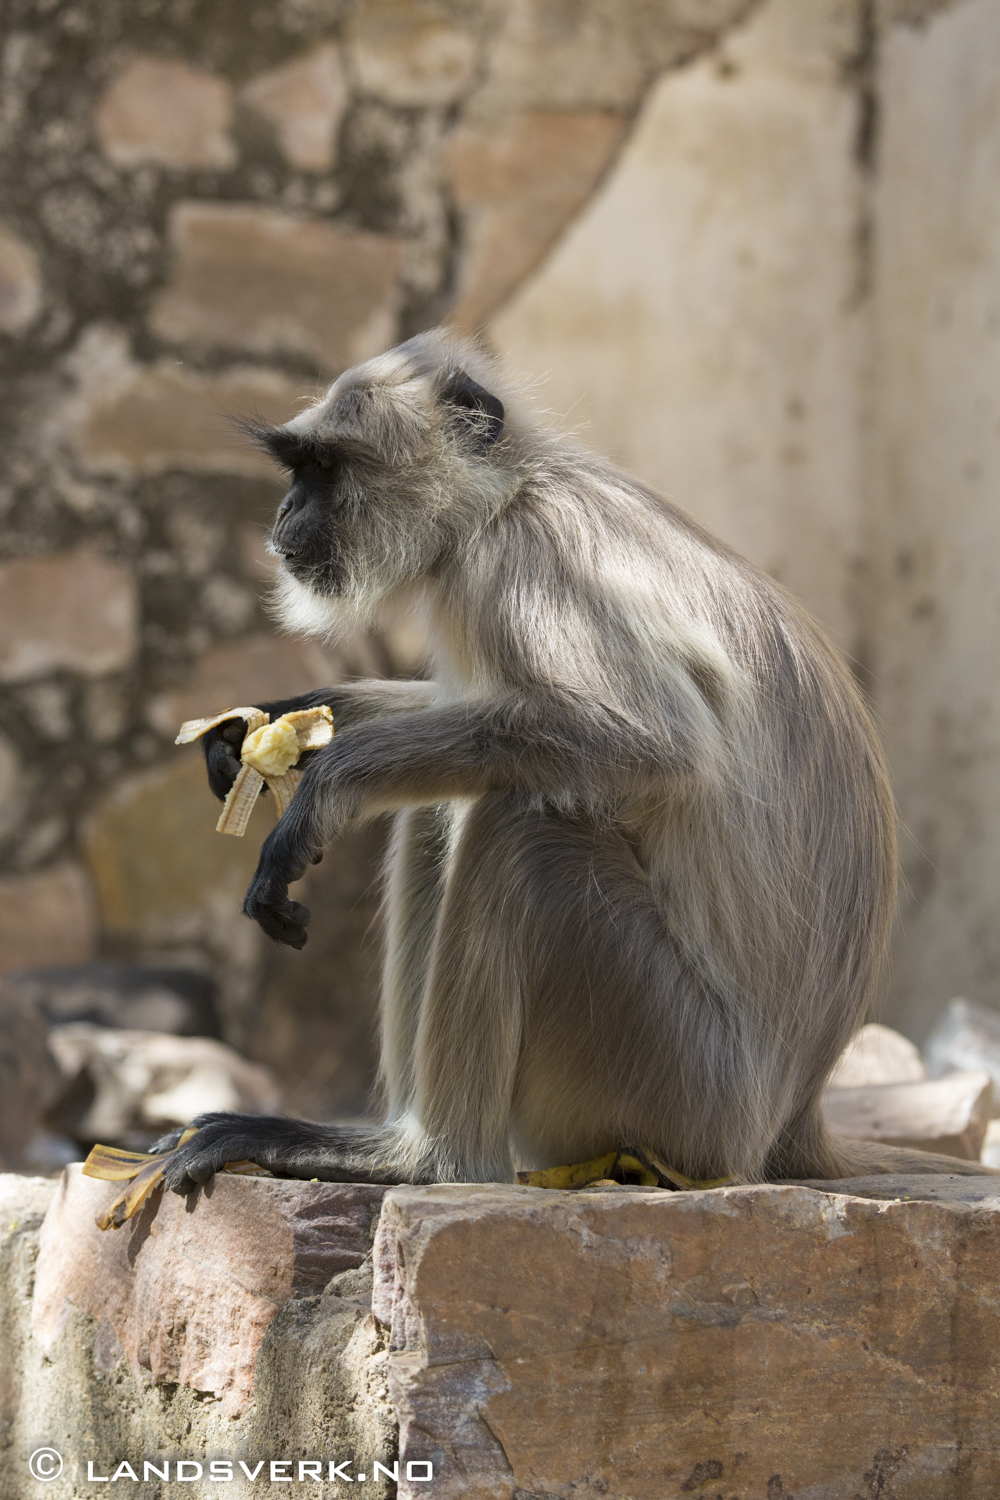 Wild hanuman monkey. Jaipur, India. 

(Canon EOS 5D Mark III / Canon EF 70-200mm f/2.8 L IS II USM / Canon 2x EF Extender III)